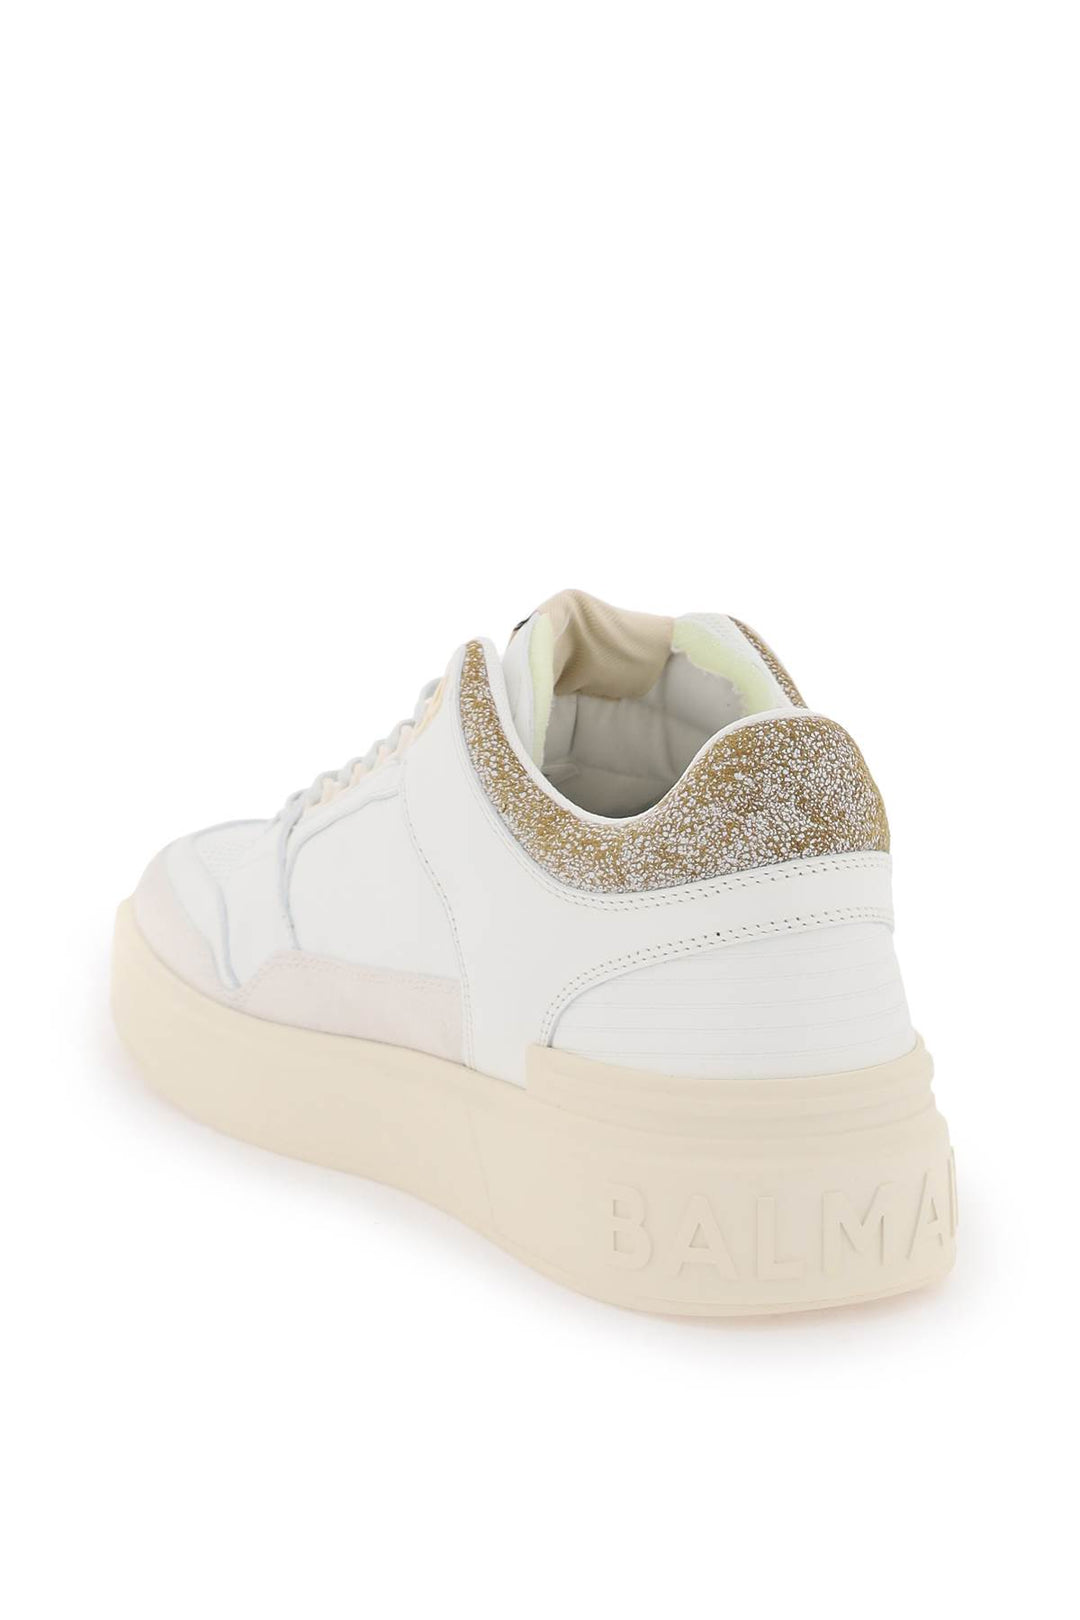 Balmain 'B Court' Mid Top Sneakers   Bianco